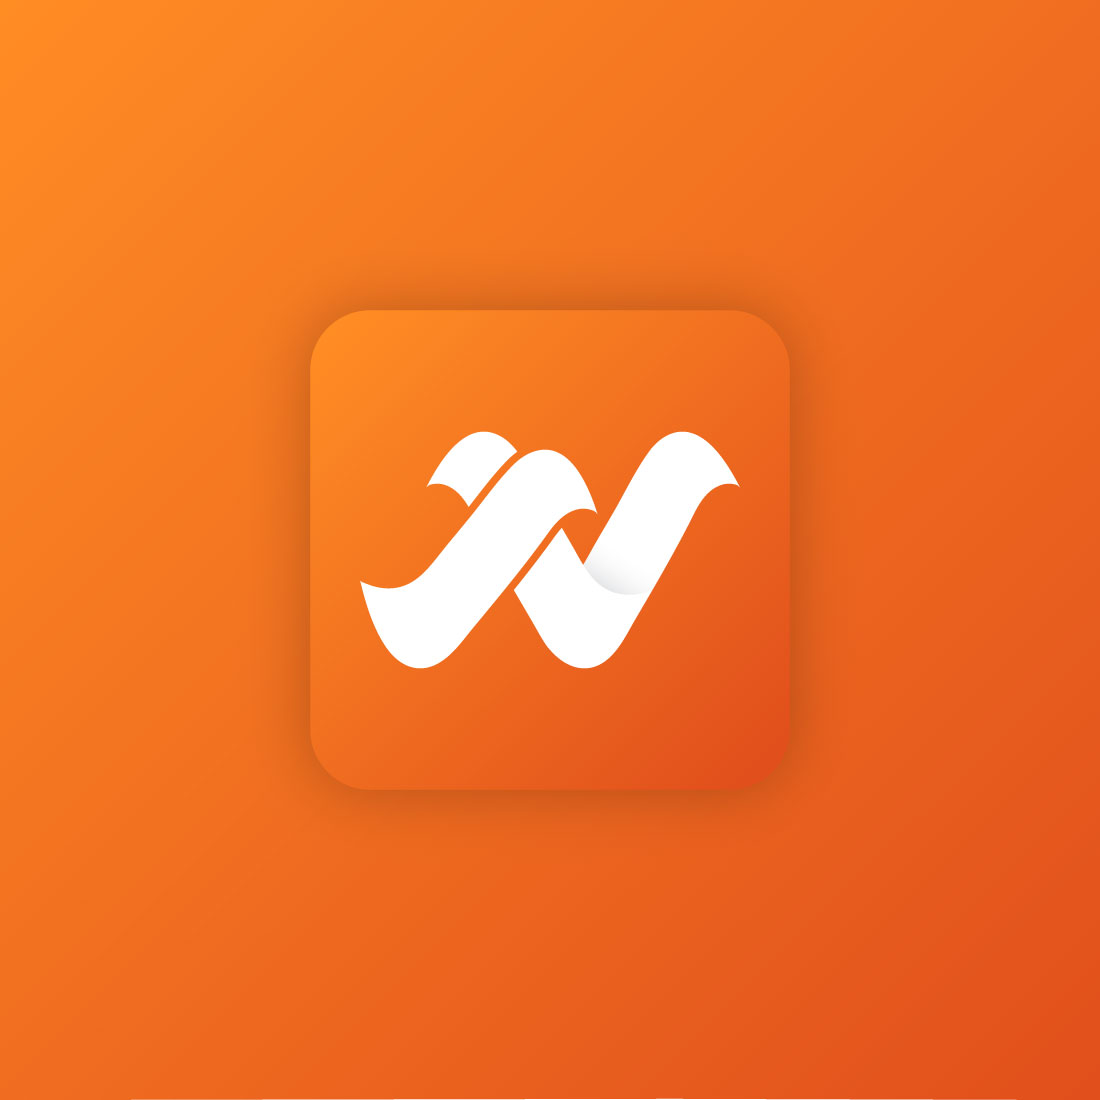 NV Letter Logo Design Template cover image.